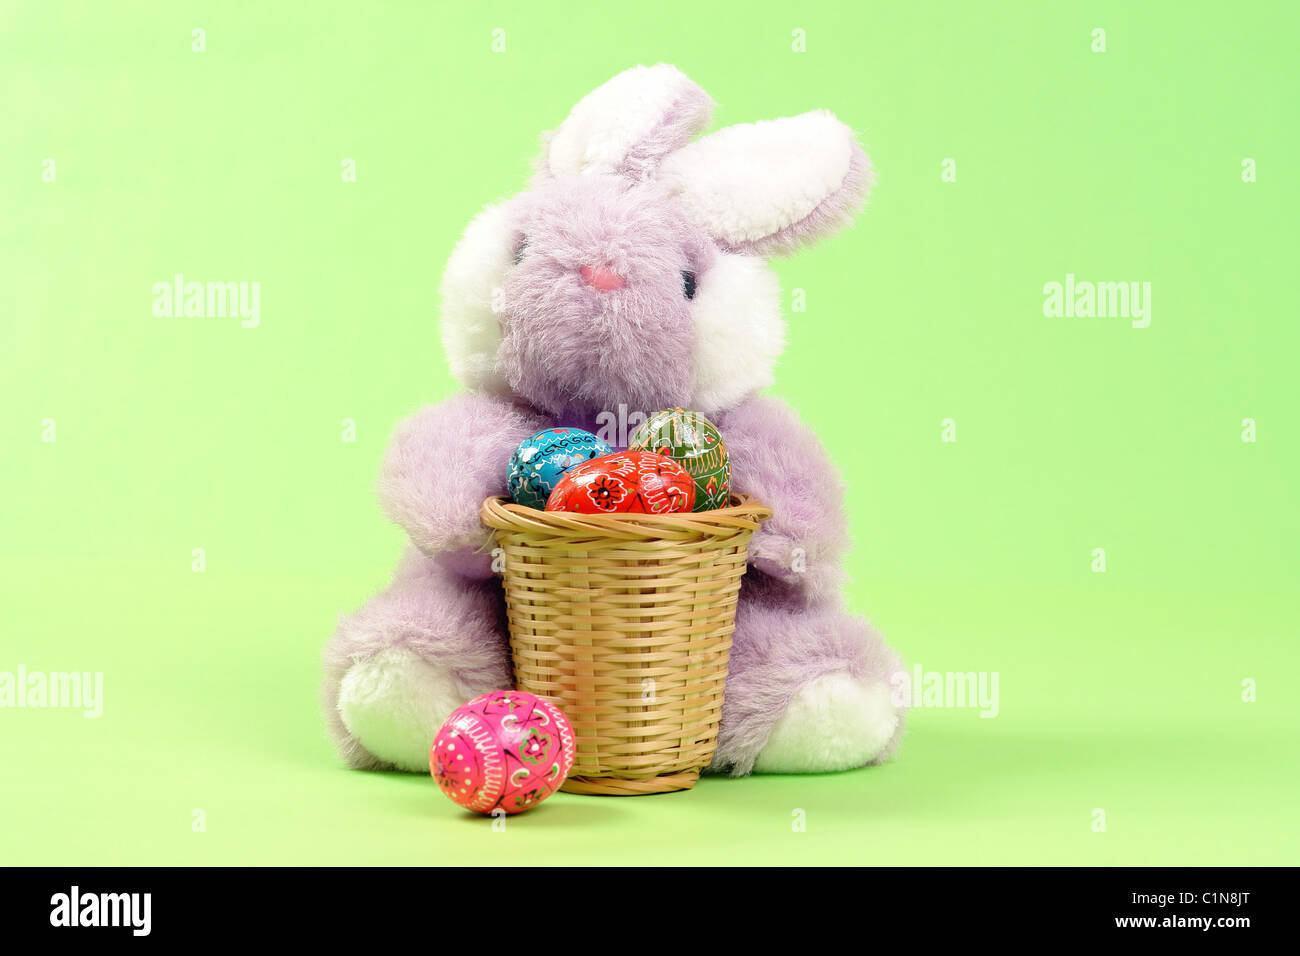 Conejito de Pascua sentado con madera canasta llena de huevos de Pascua sobre fondo verde claro Foto de stock